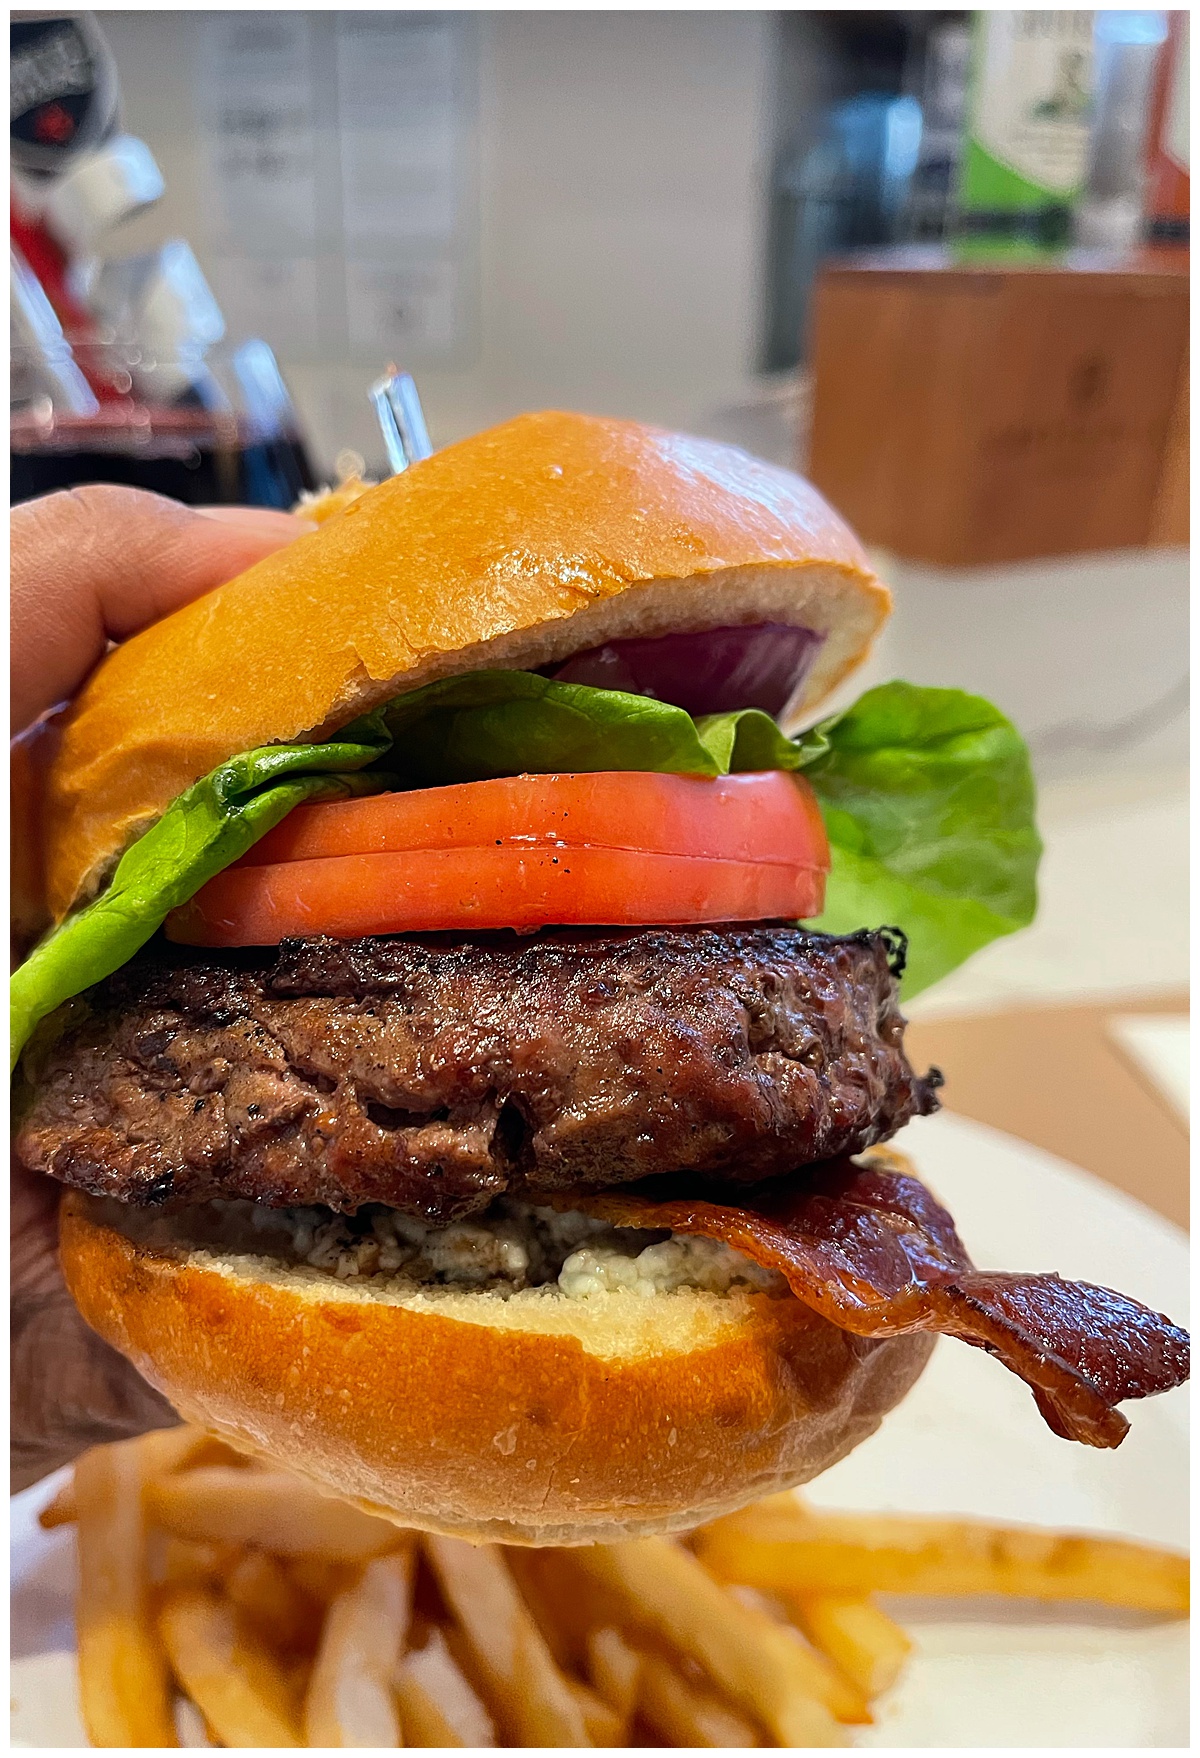 Eating Newark Airport Vanguard kitchen burger 3